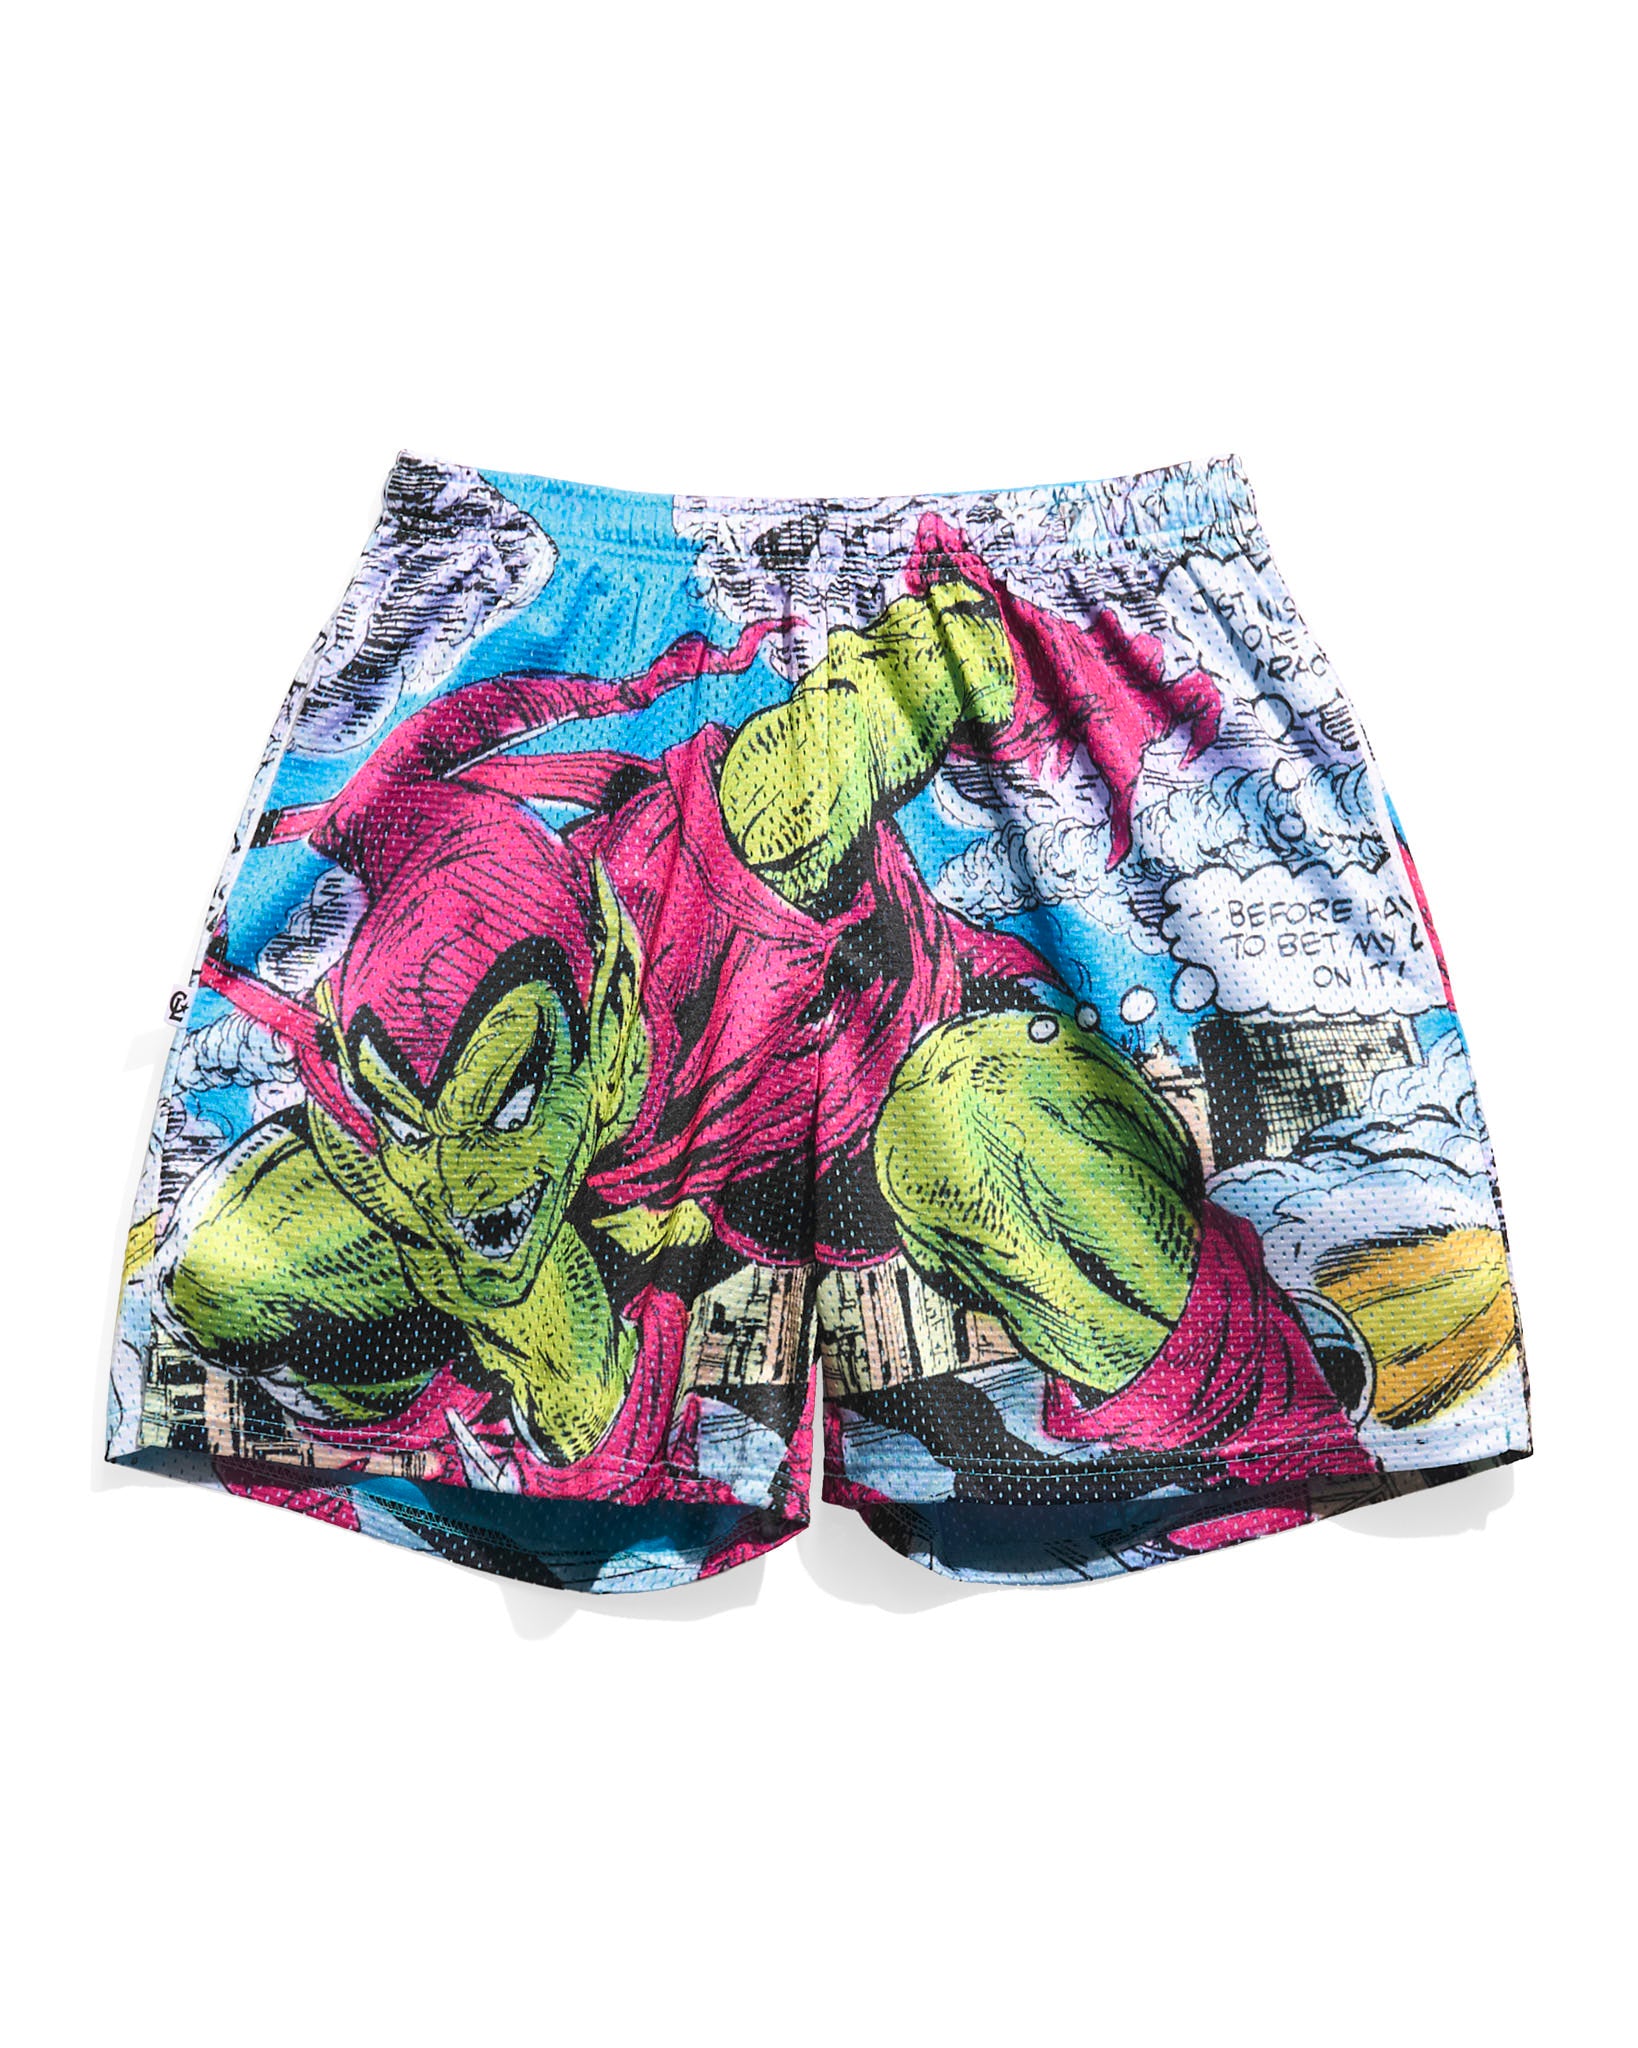 Spider-Man Green Goblin Retro Shorts